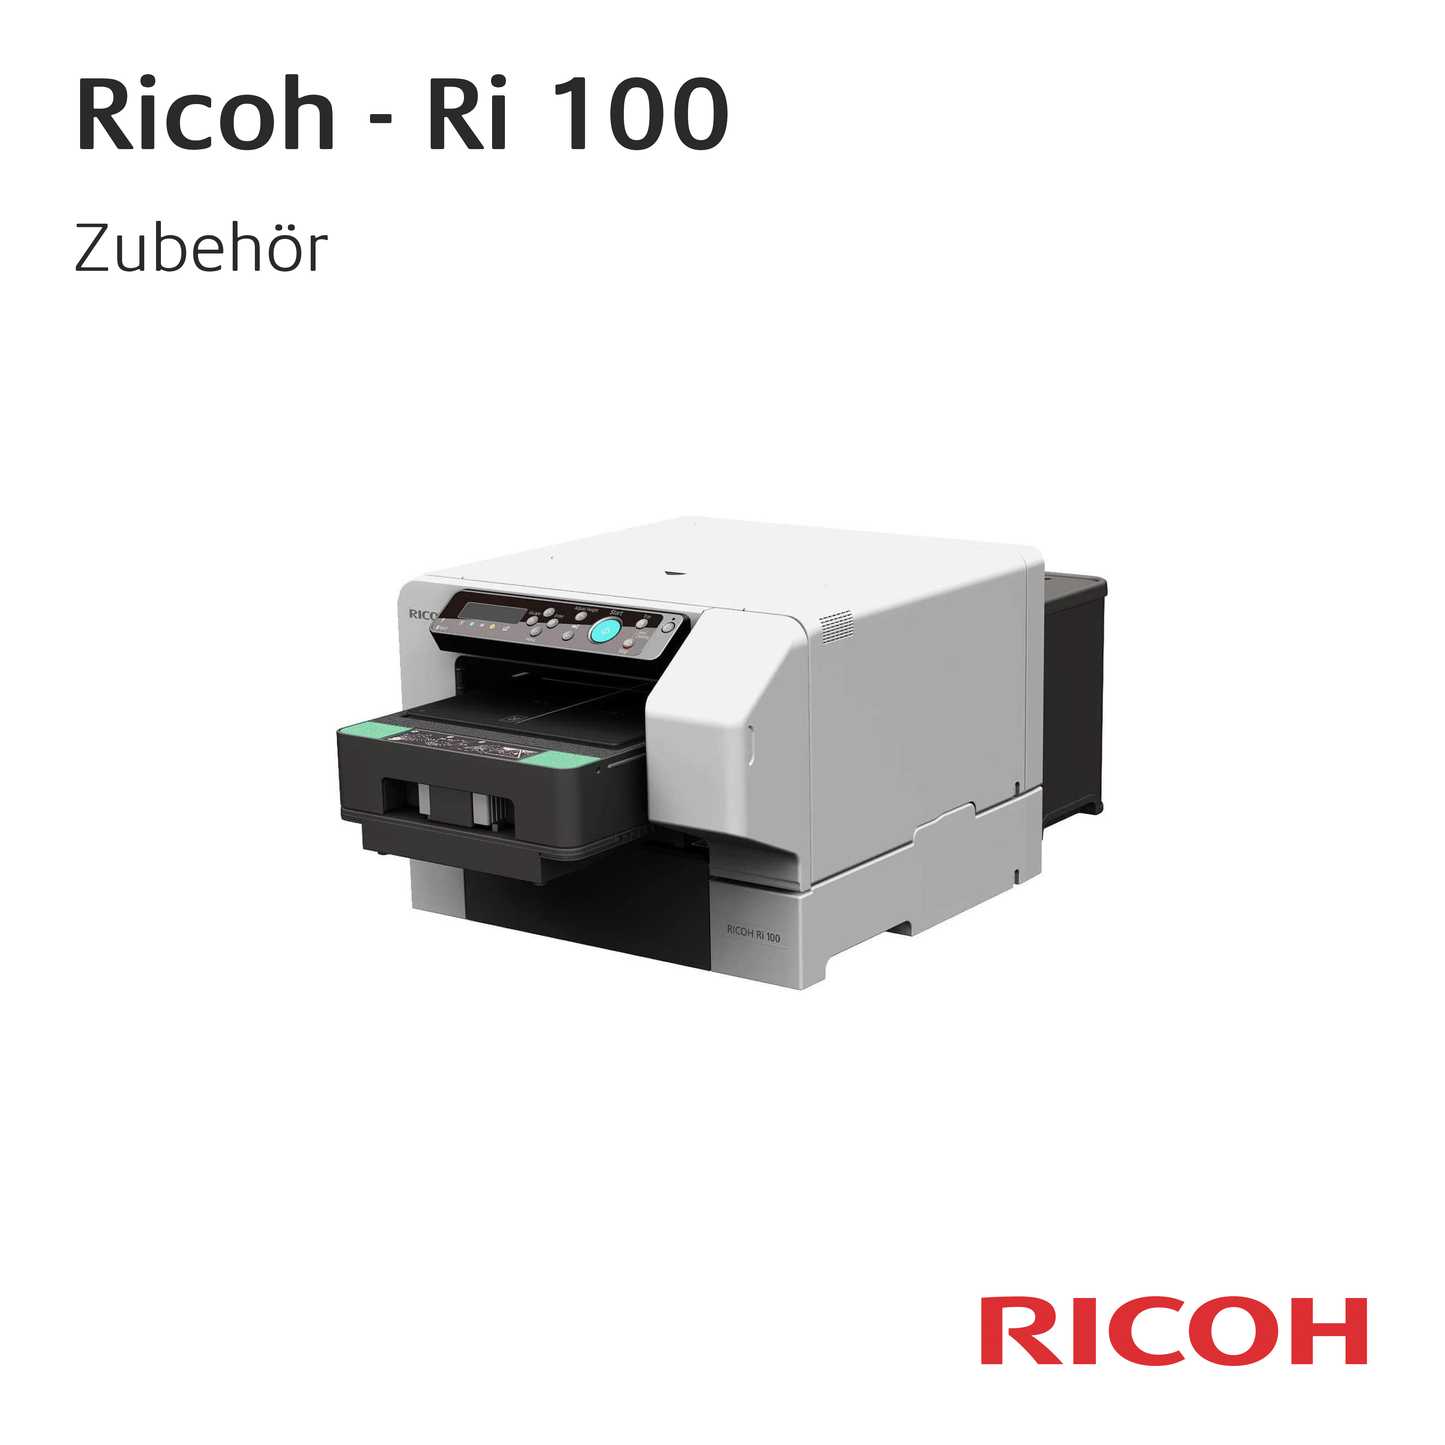 Ricoh Ri 100 - Zubehör